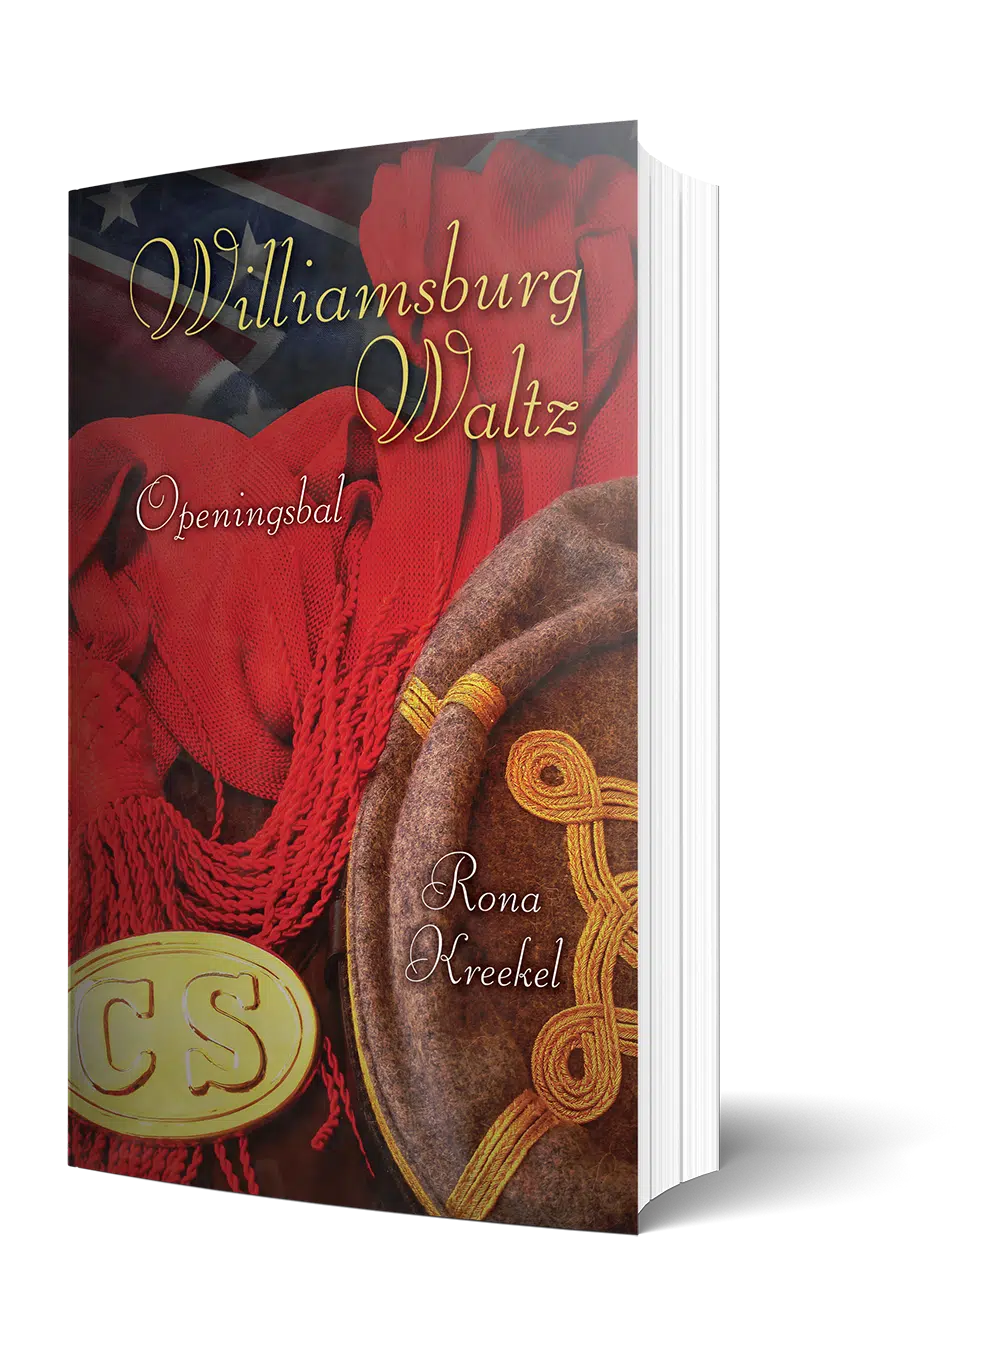 Williamsburg Waltz - Openingsbal